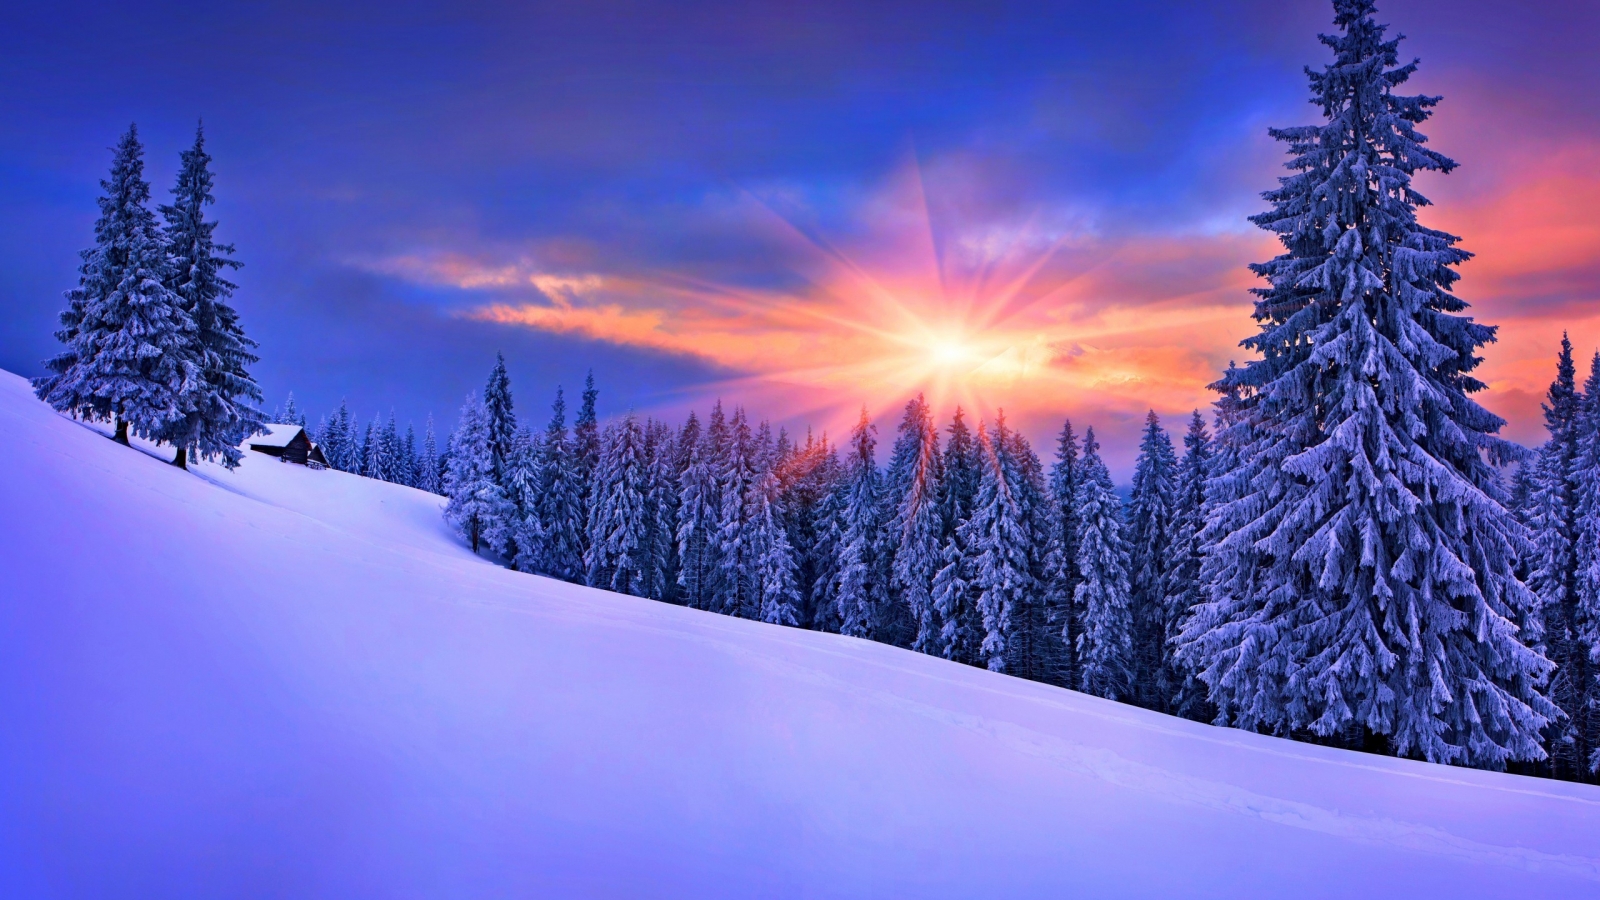 Late Winter Sunset for 1600 x 900 HDTV resolution